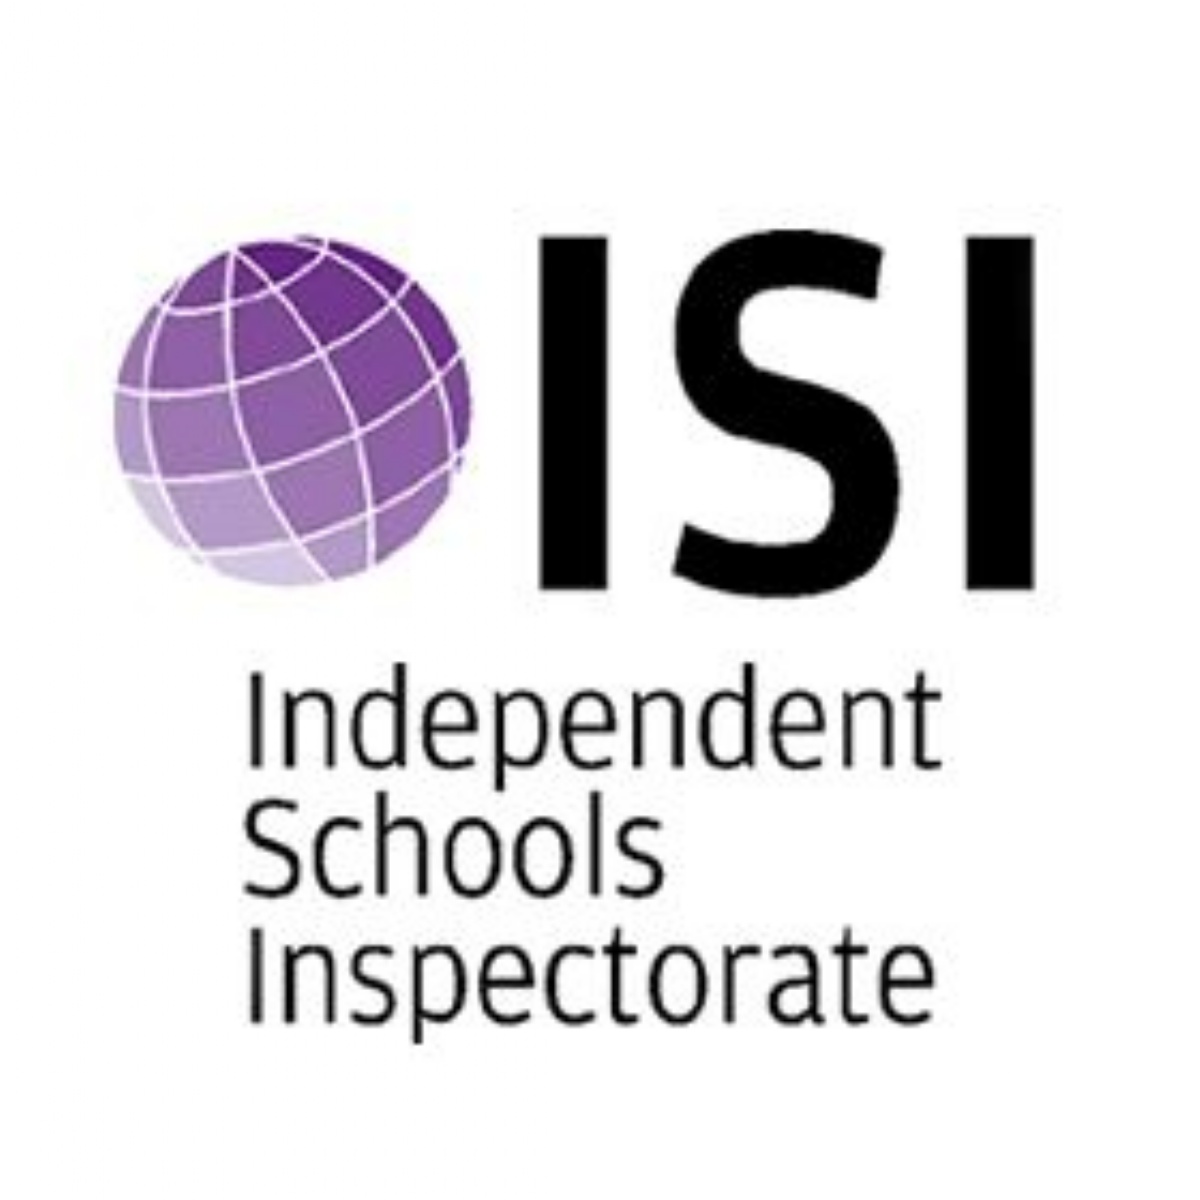 The Independent Schools Inspectorate